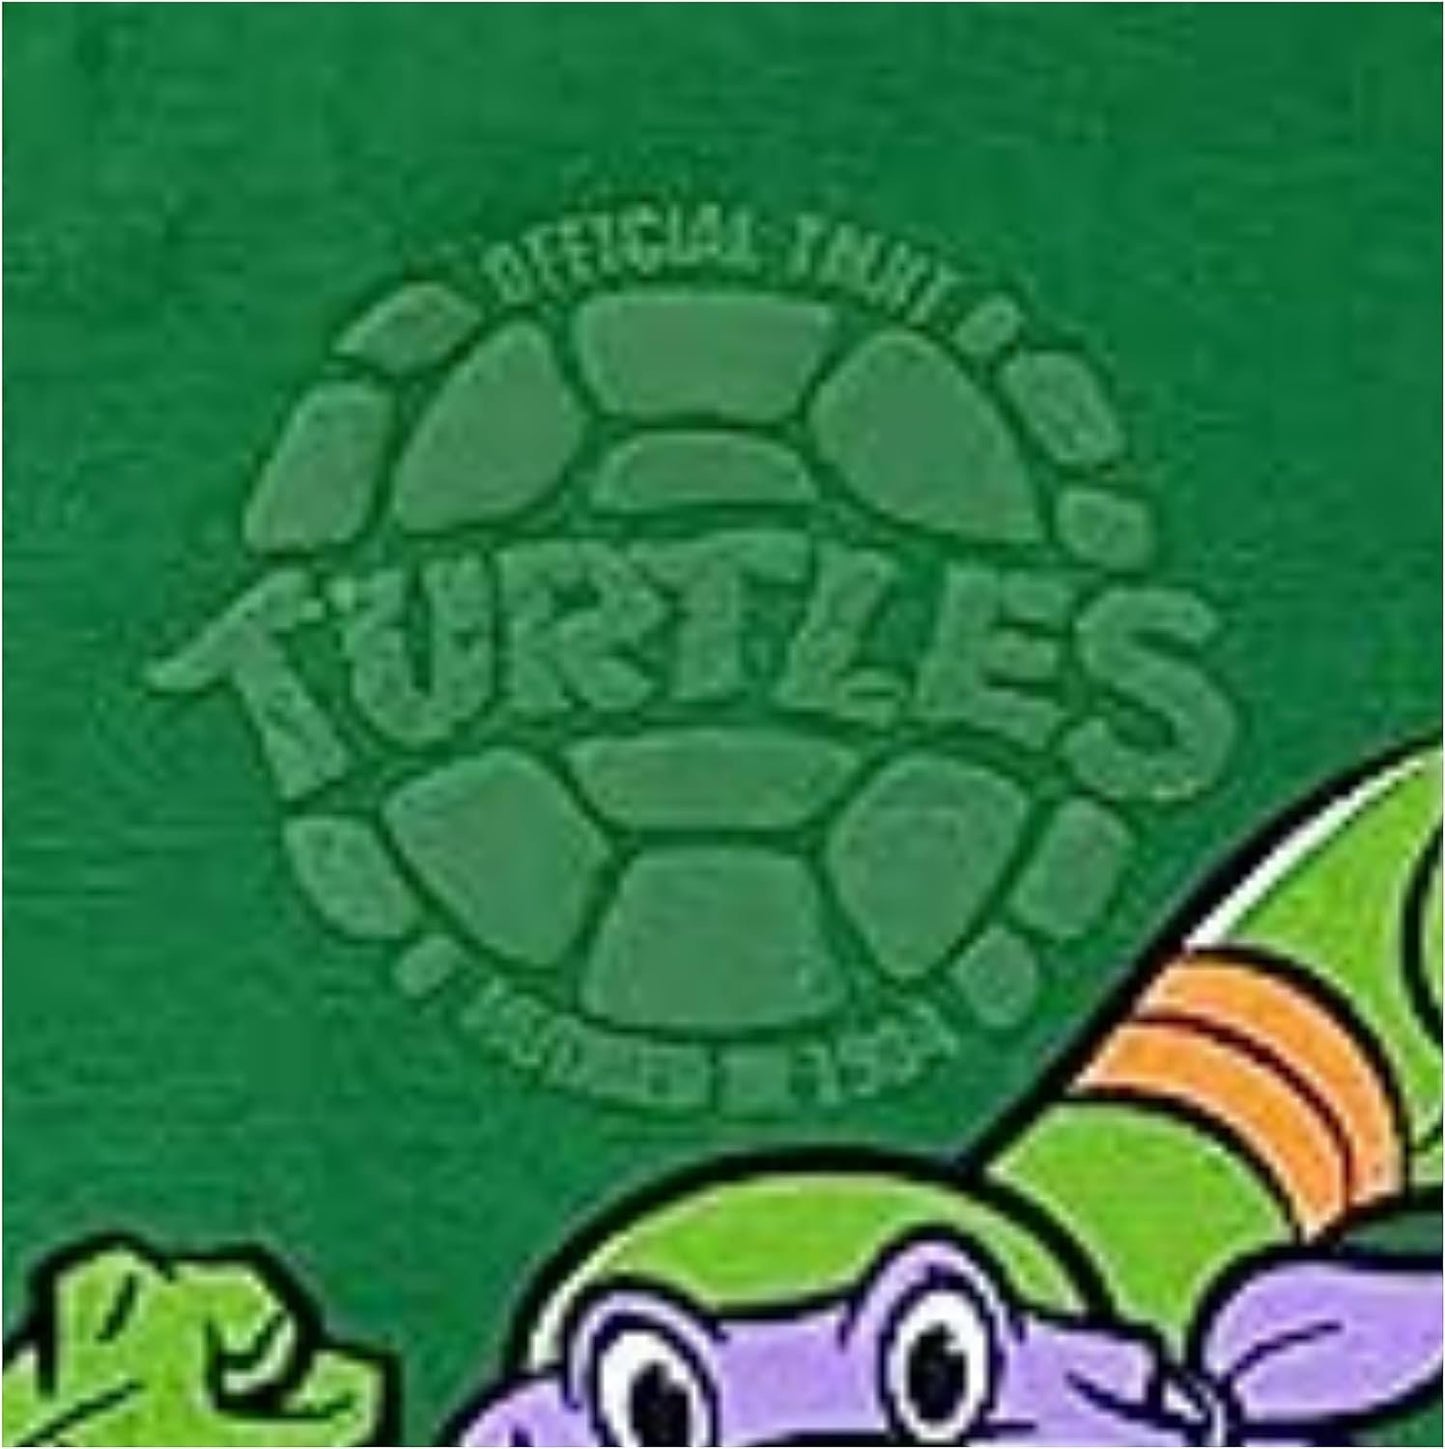 Teenage Mutant Ninja Turtles Boys Short Sleeve T-Shirt - Nickelodeon